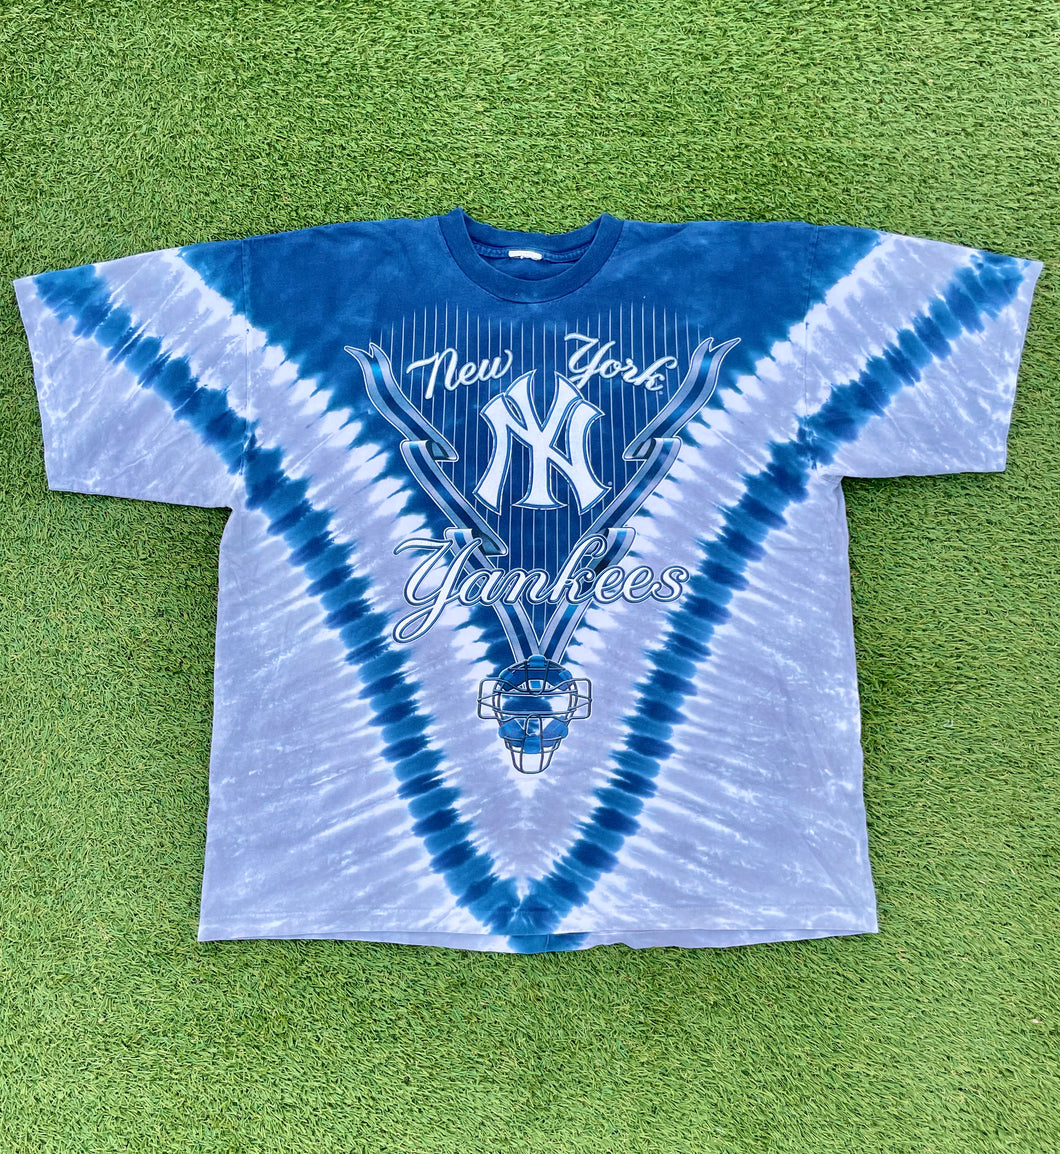 Majestic New York Yankees T-Shirts in New York Yankees Team Shop 